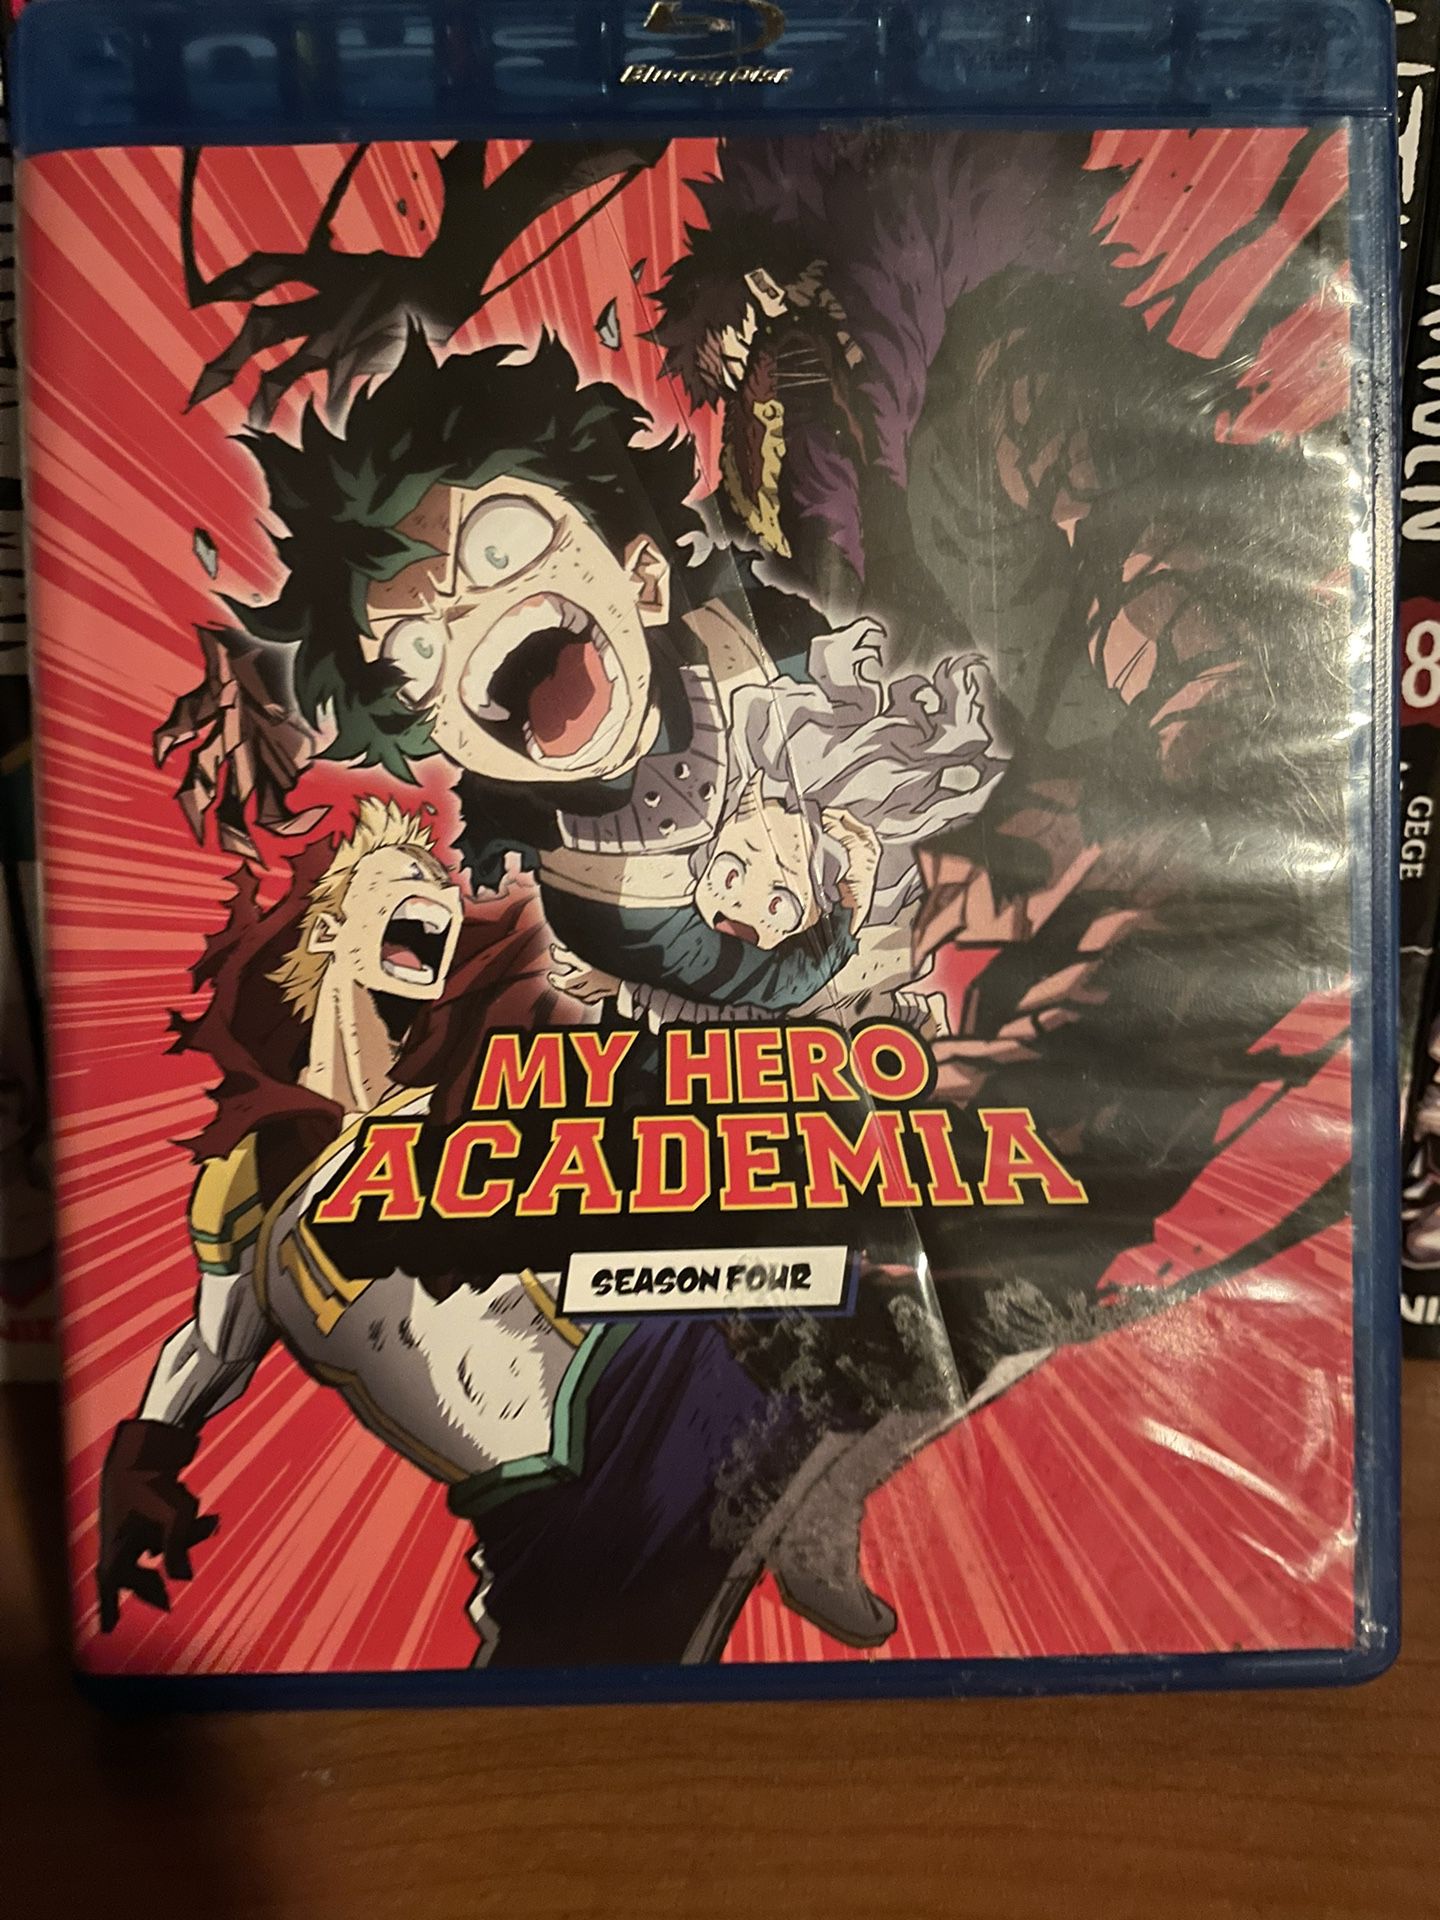 My Hero Academia Season 4 on Blu-ray